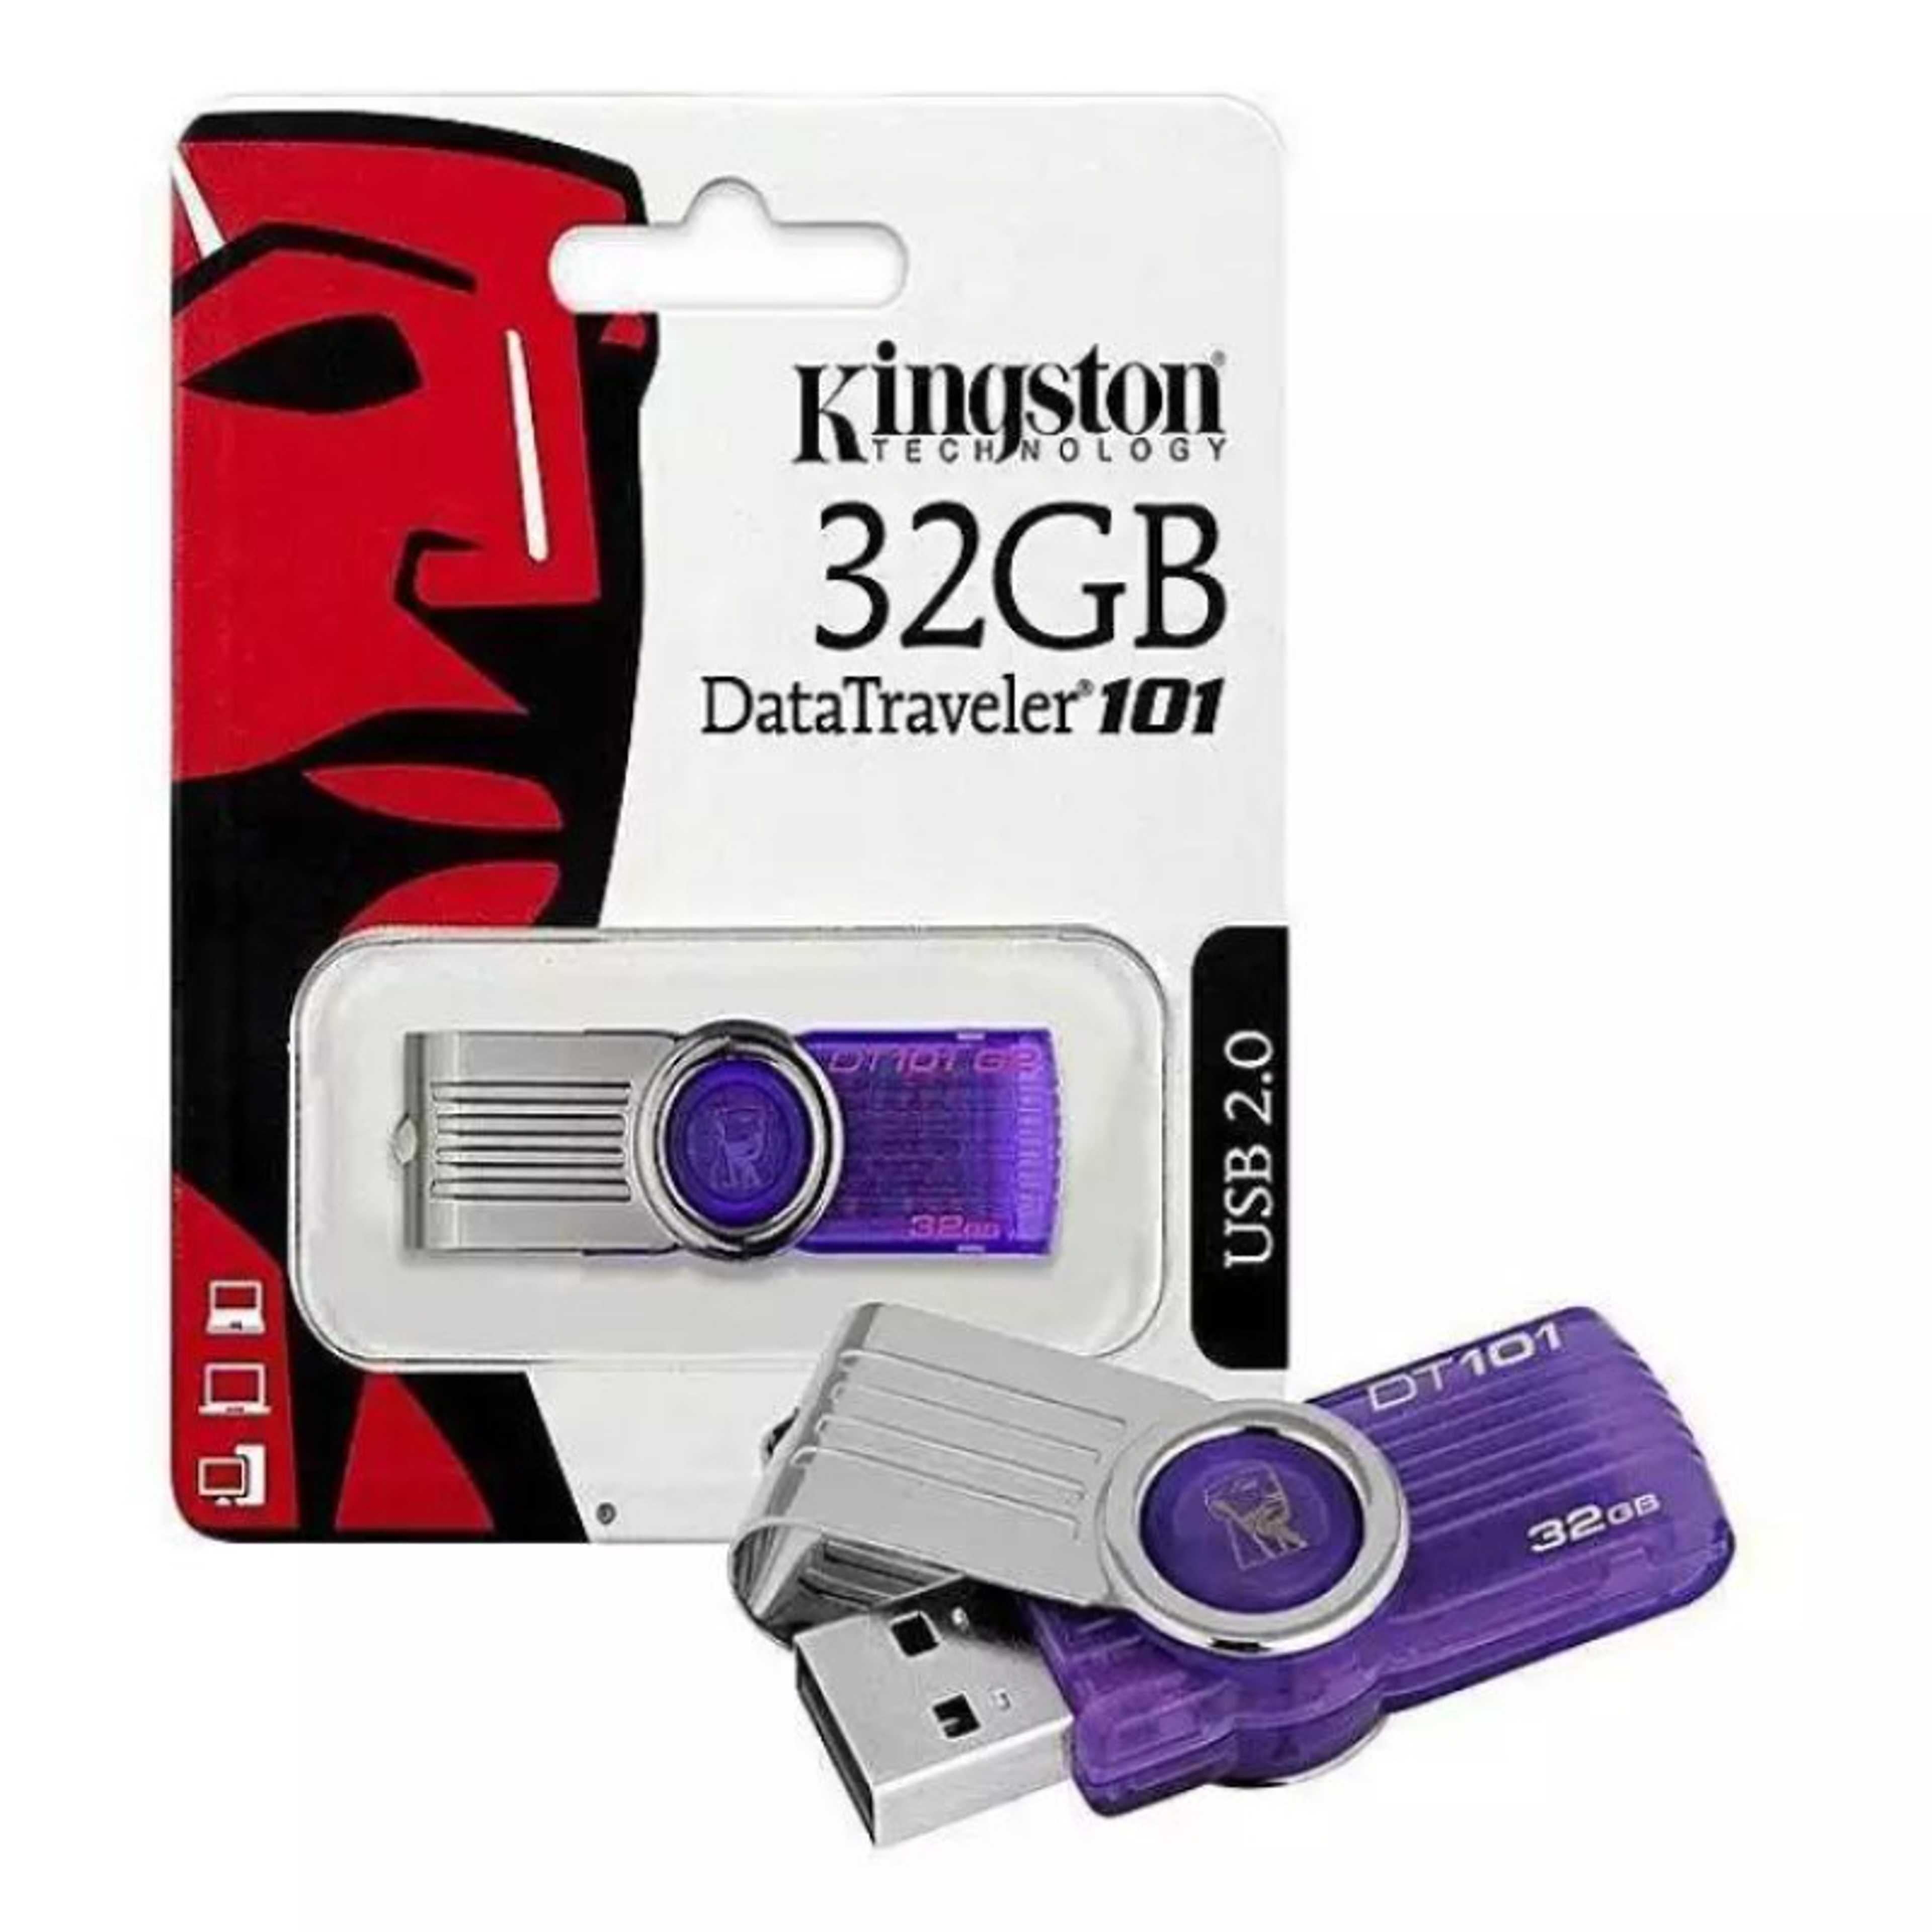 Kingston 32GB DataTraveler 101 USB Flash Drive